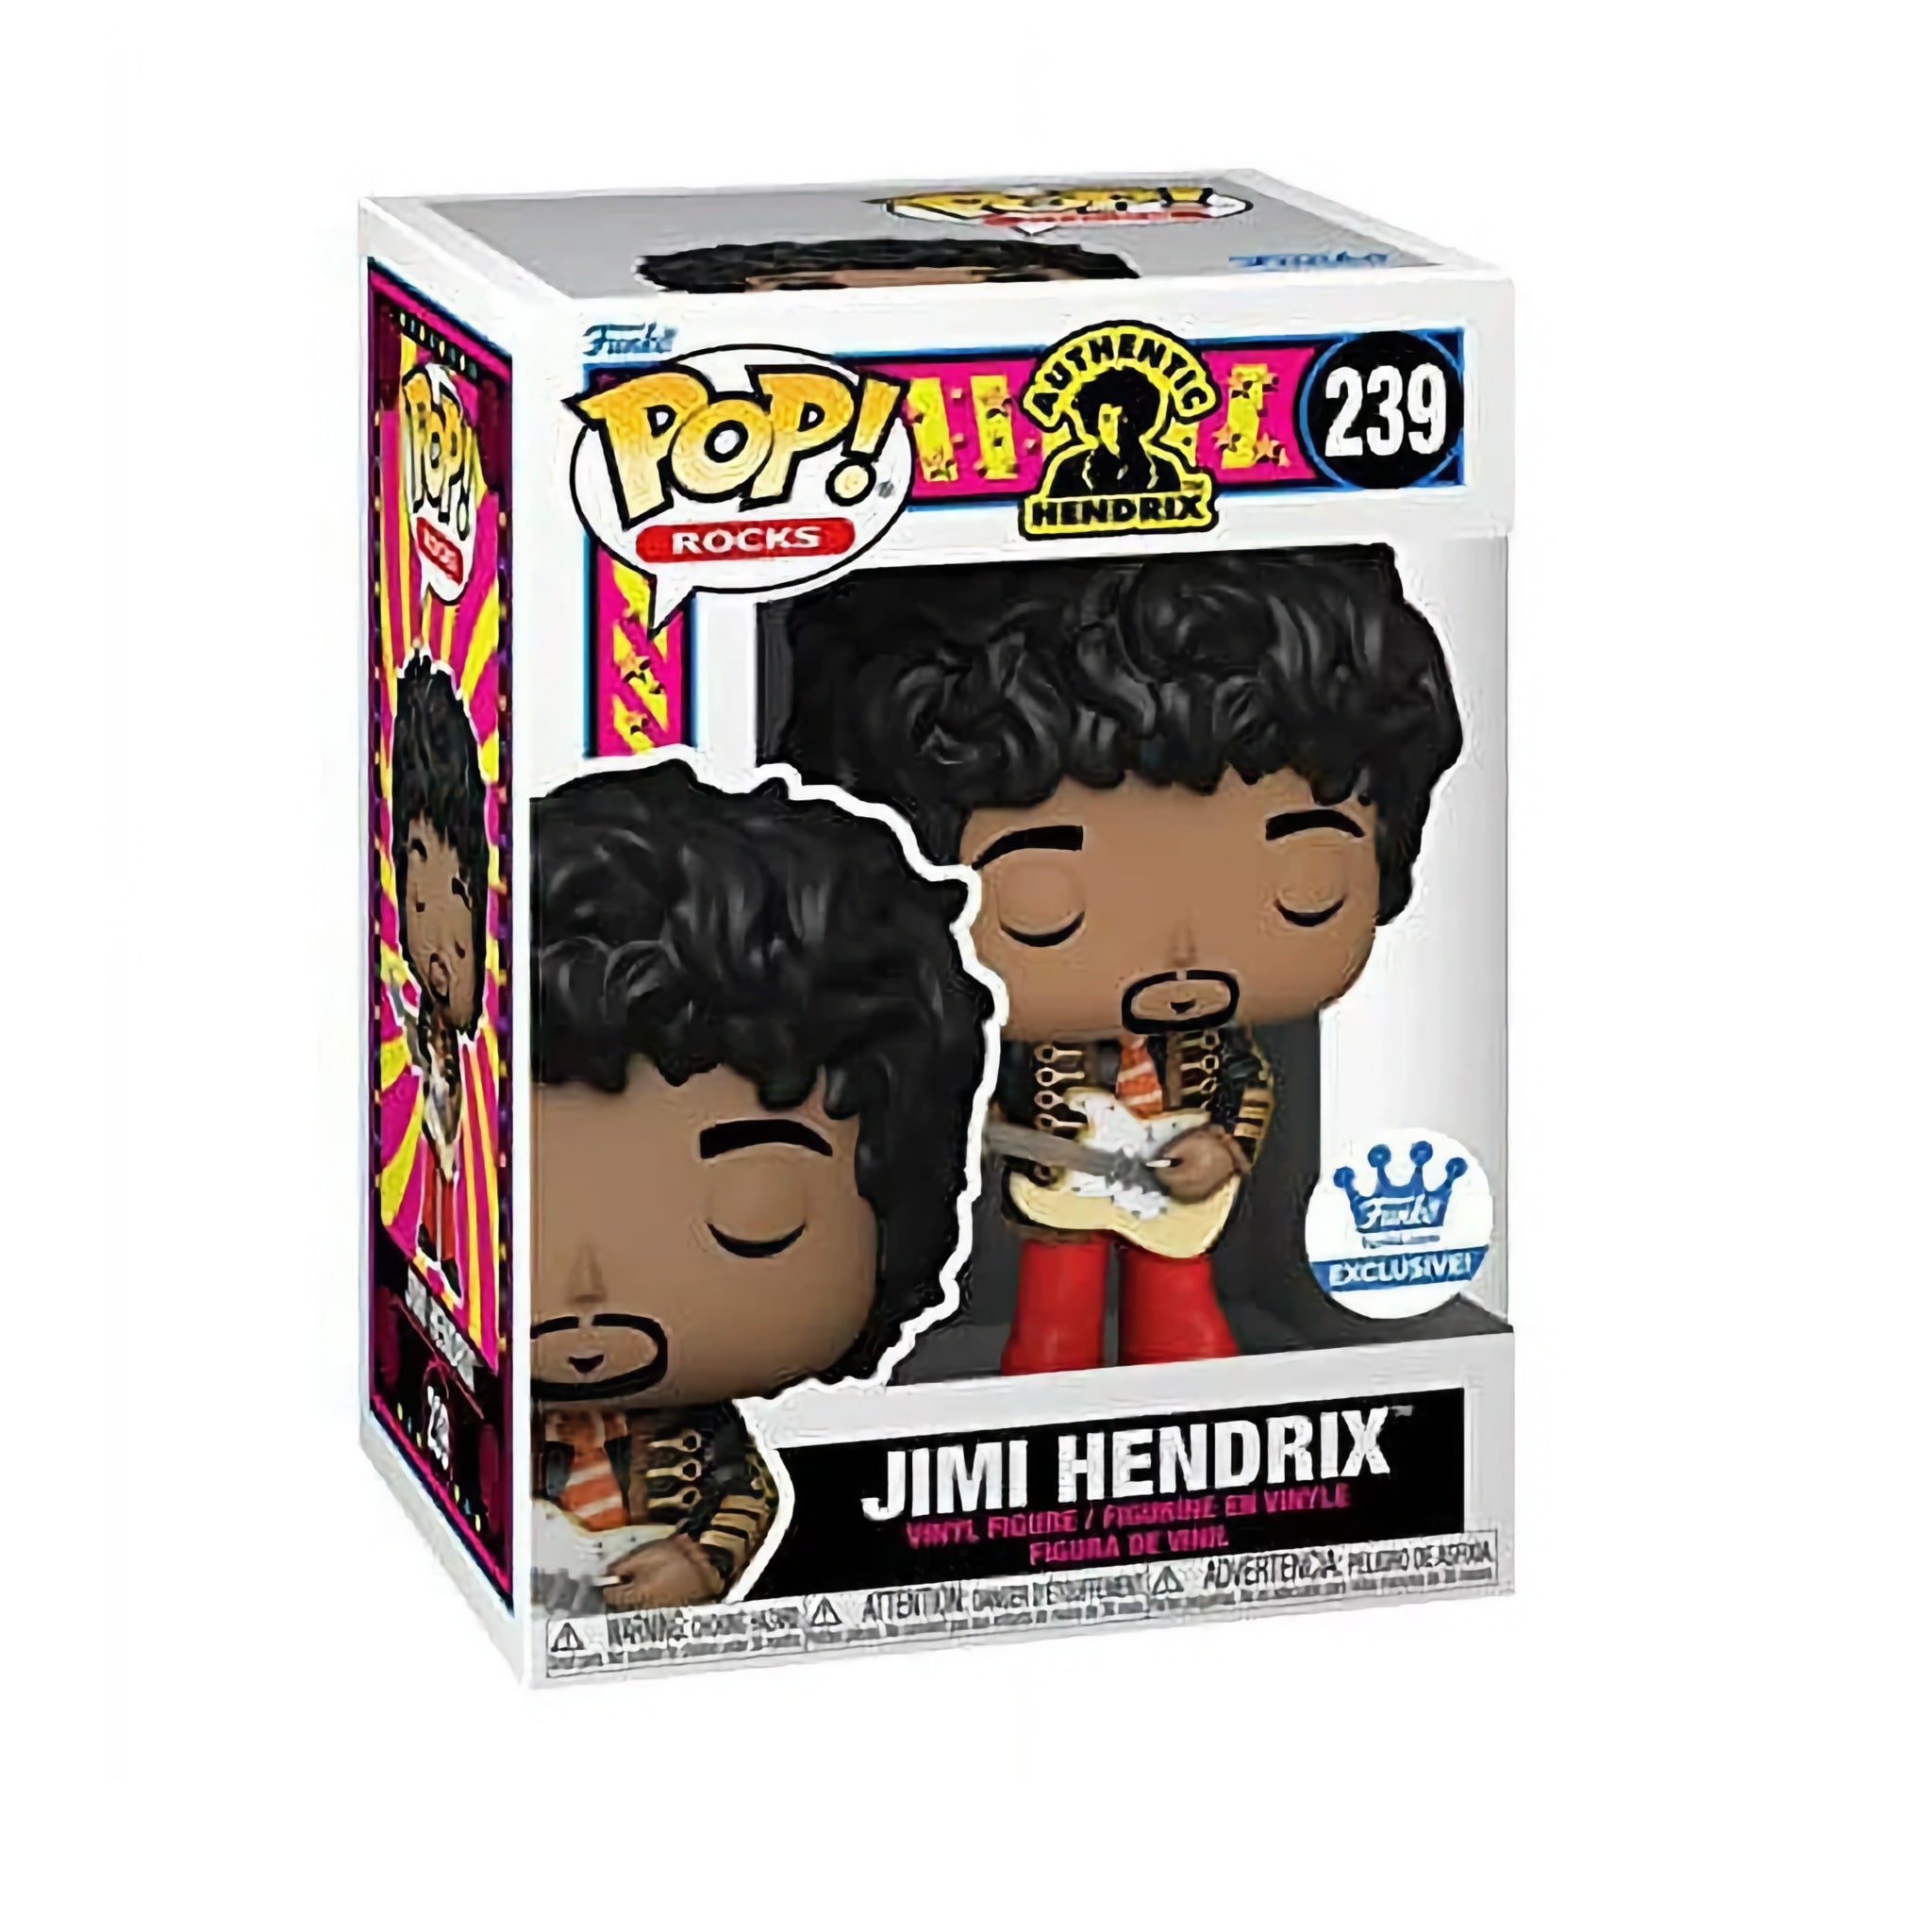 Jimi Hendrix Funko Pop! FUNKO EXCLUSIVE